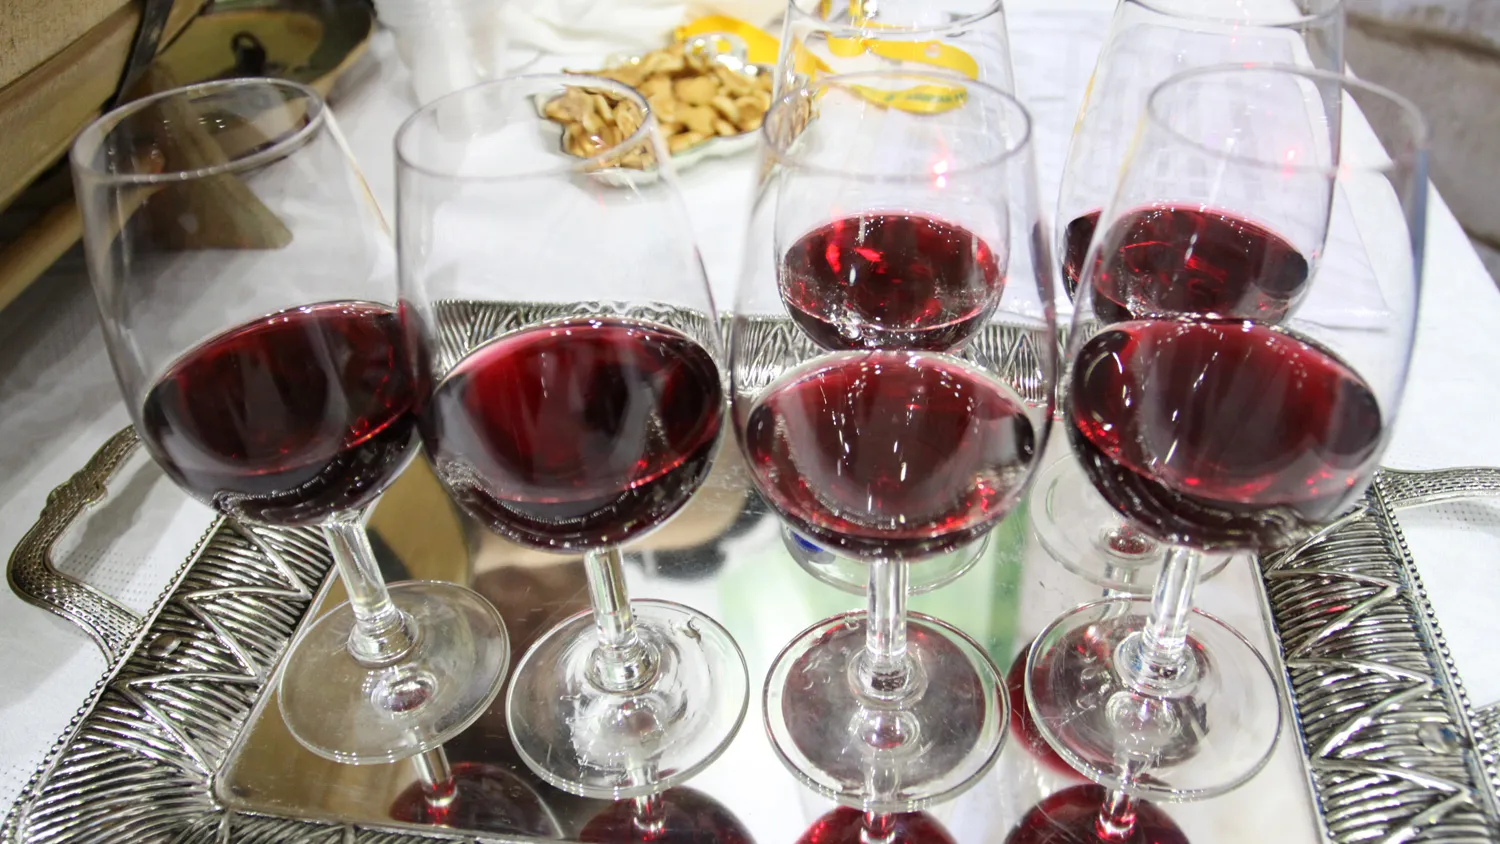 Разрешение на поставку вин в РФ получили пять молдавских предприятий